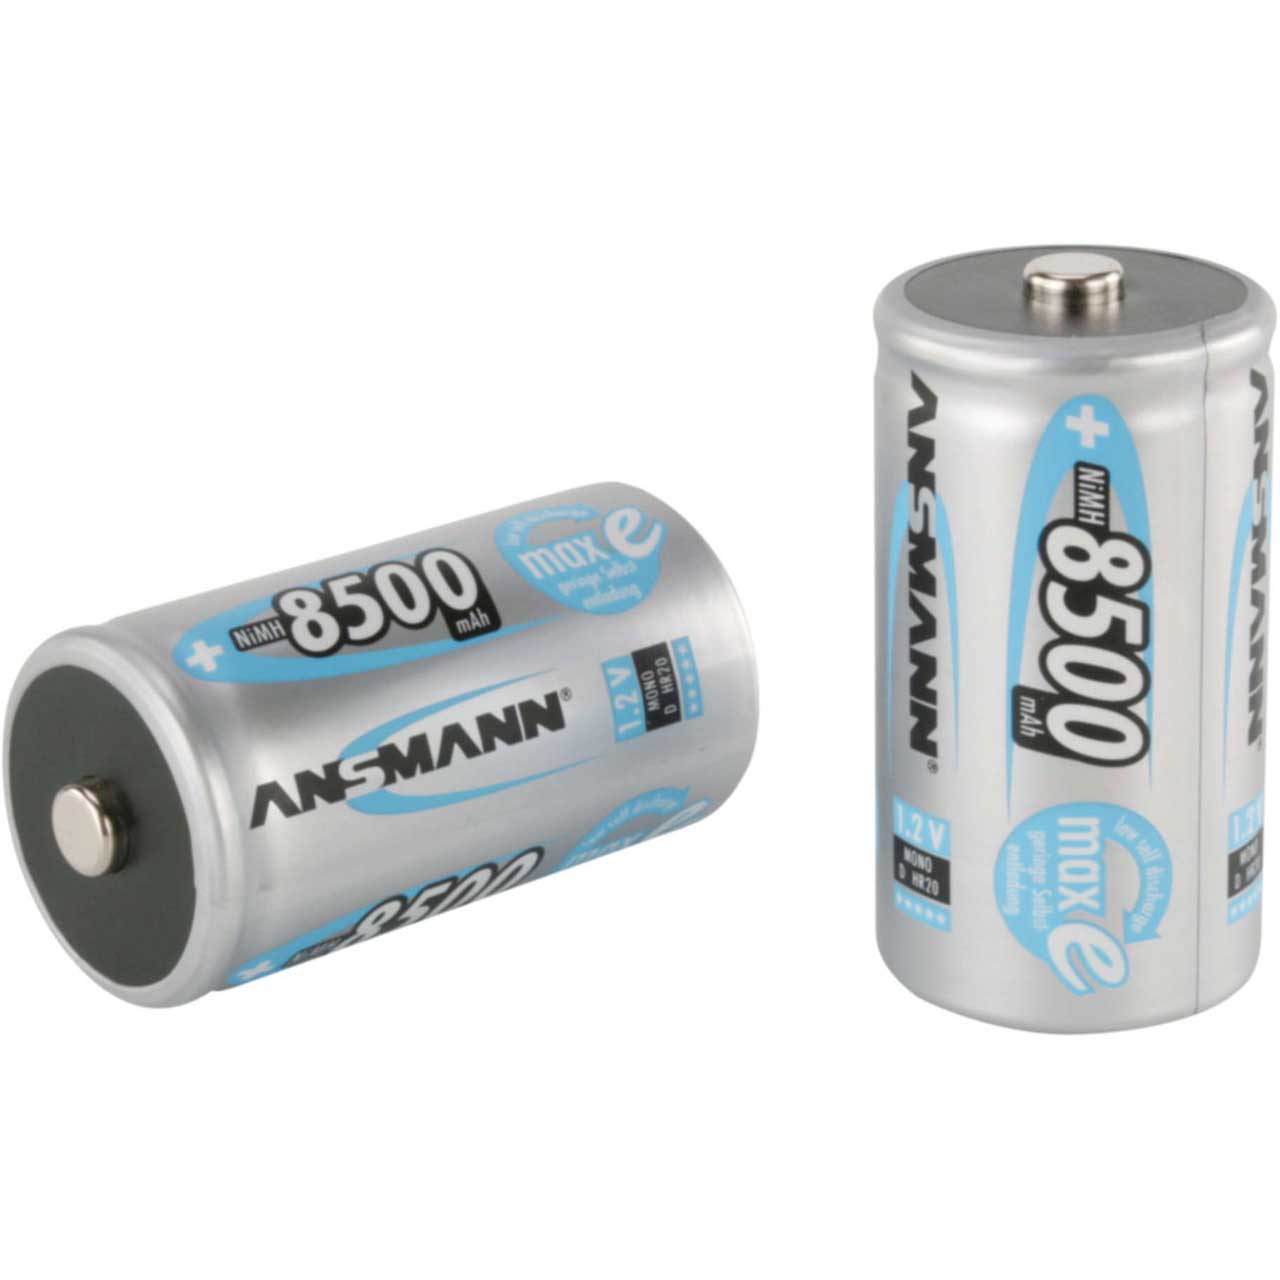 Two AA NiMH rechargeable batteries - Williams AV